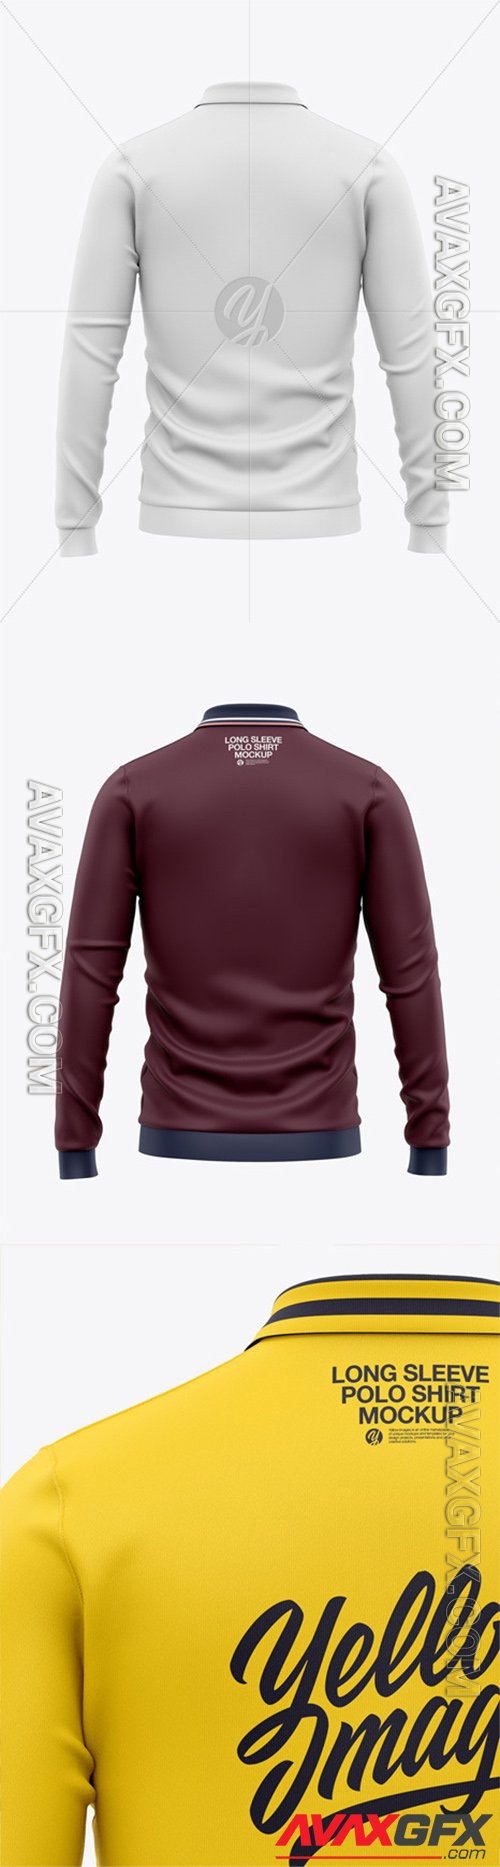 Men's Long Sleeve Polo Shirt - Back View 56602